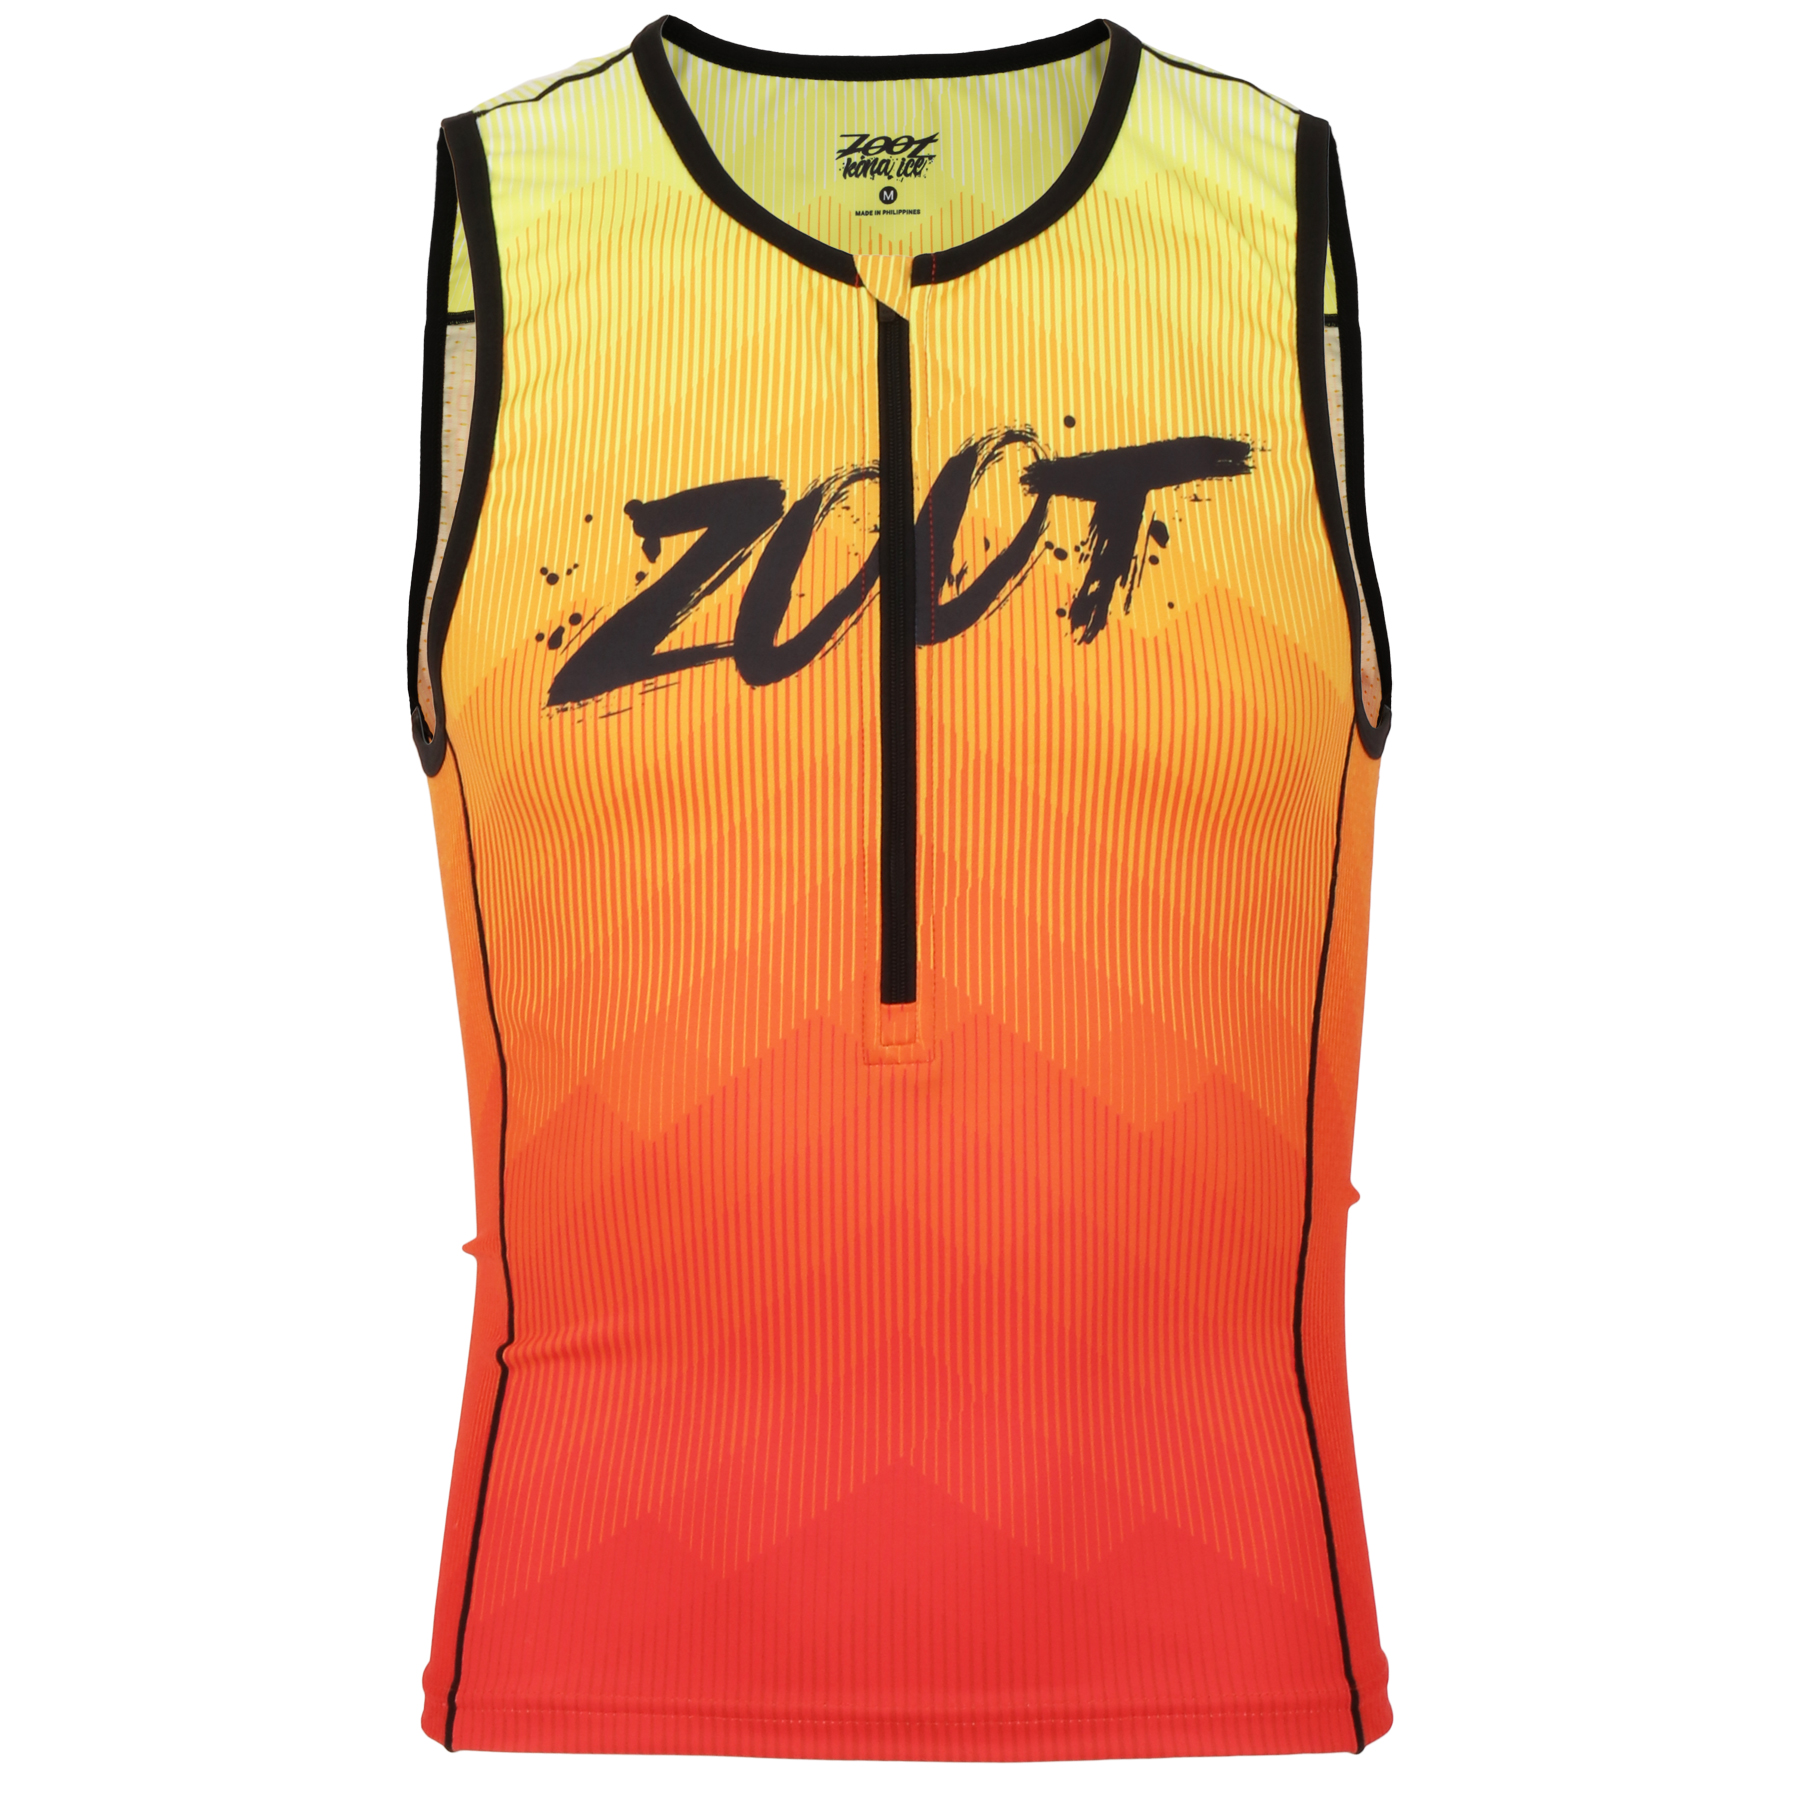 Foto de ZOOT LTD Triathlon Camiseta sin Mangas Hombre - kona ice